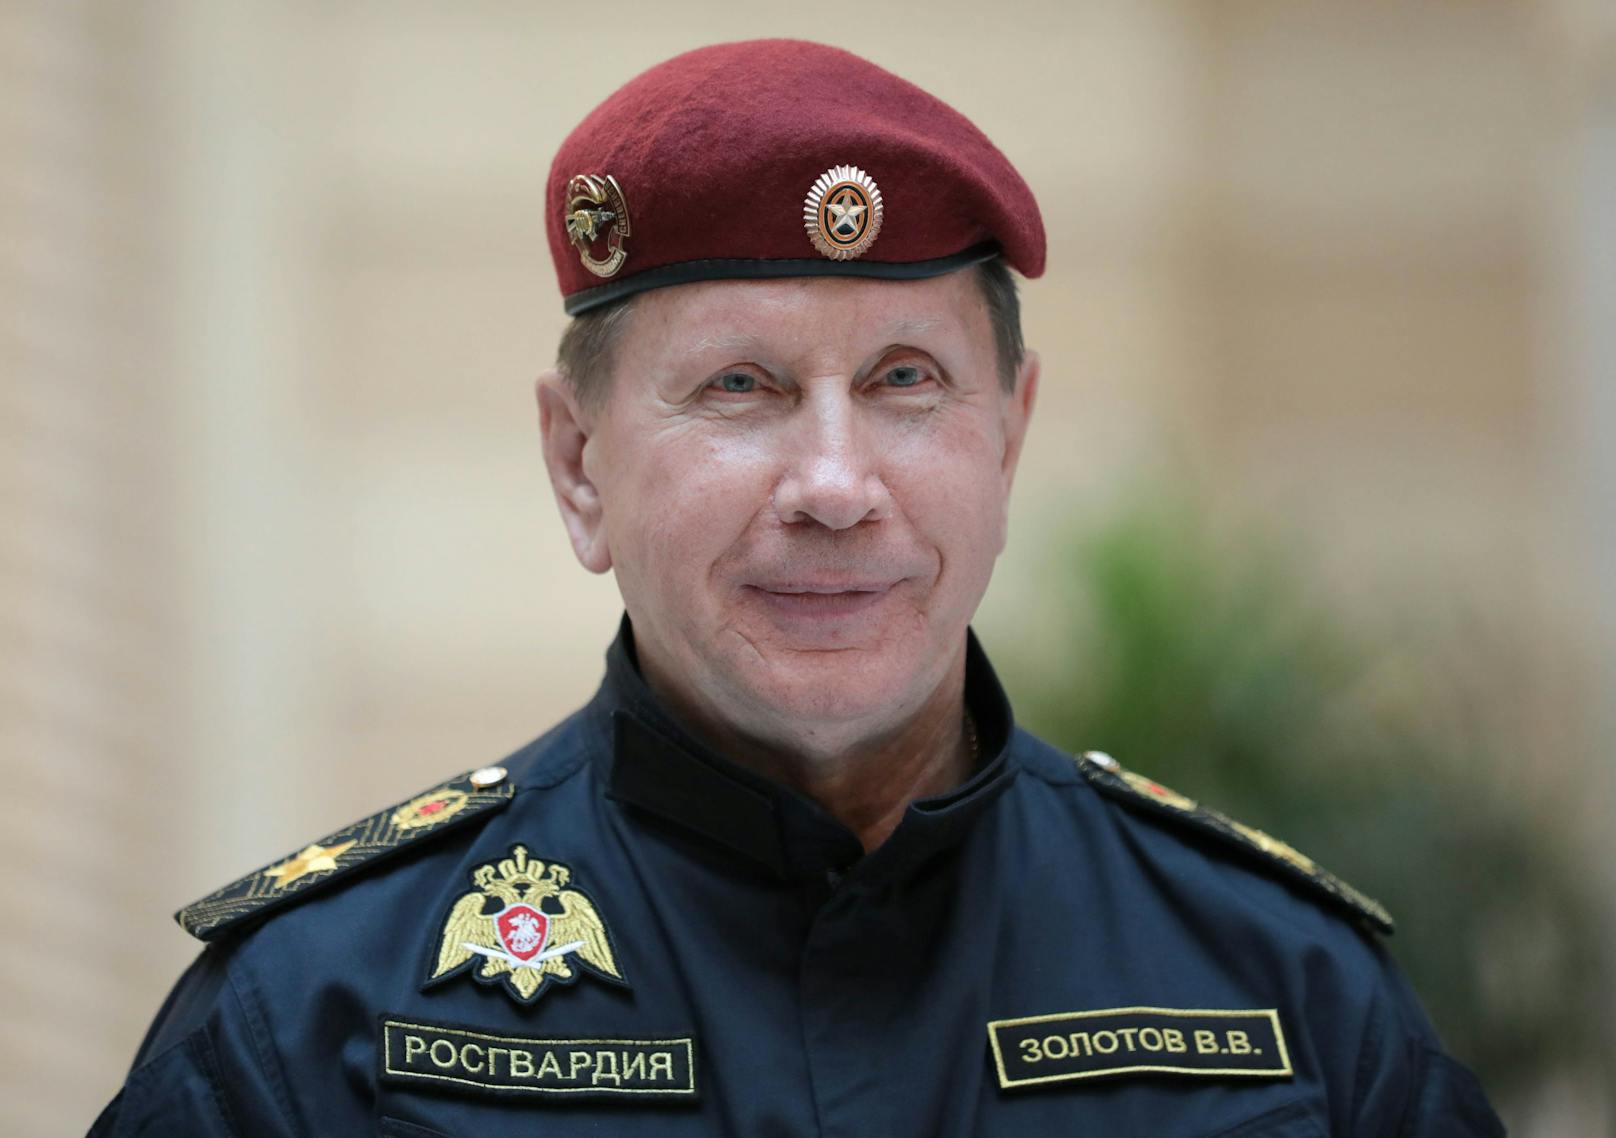 Viktor Solotow ist Direktor der Nationalgarde. 